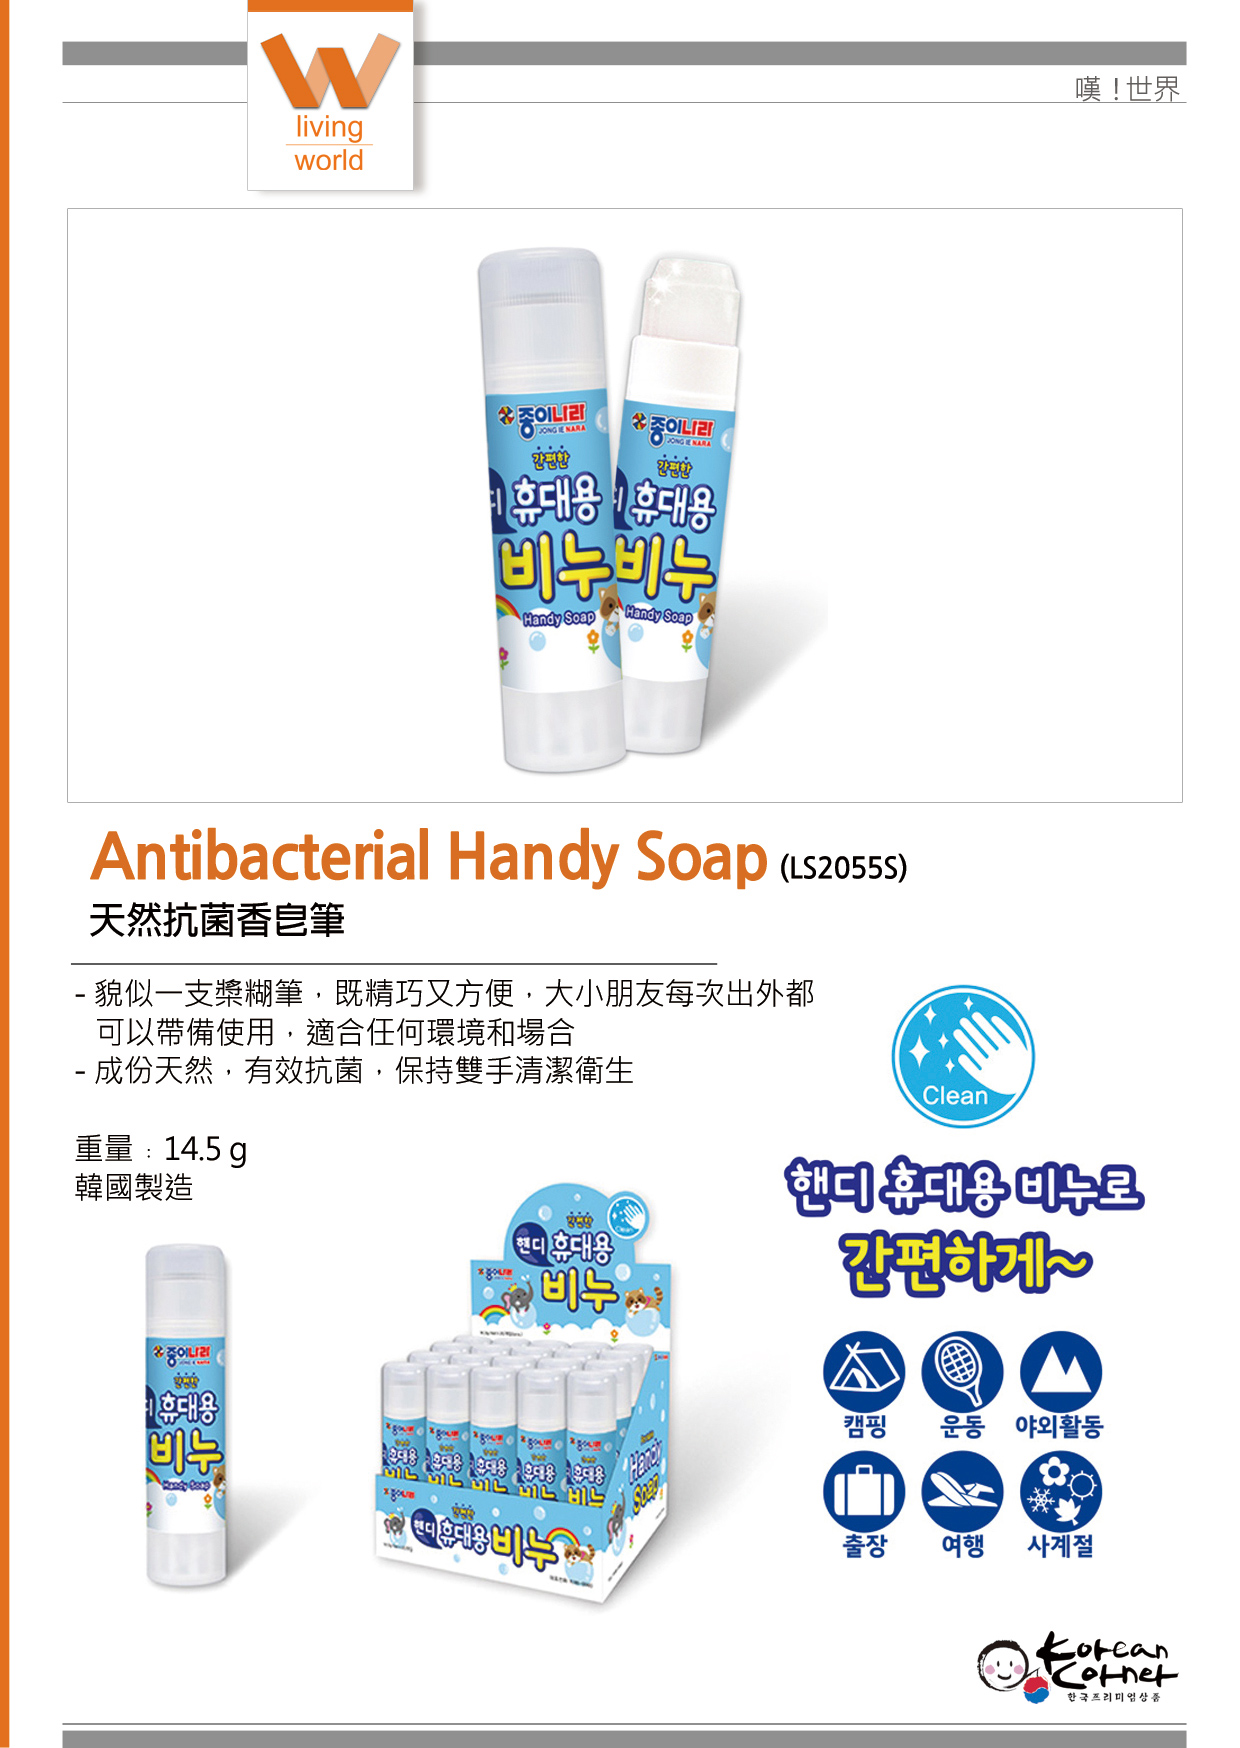 天然抗菌香皂筆 Antibacterial-Handy-Soap